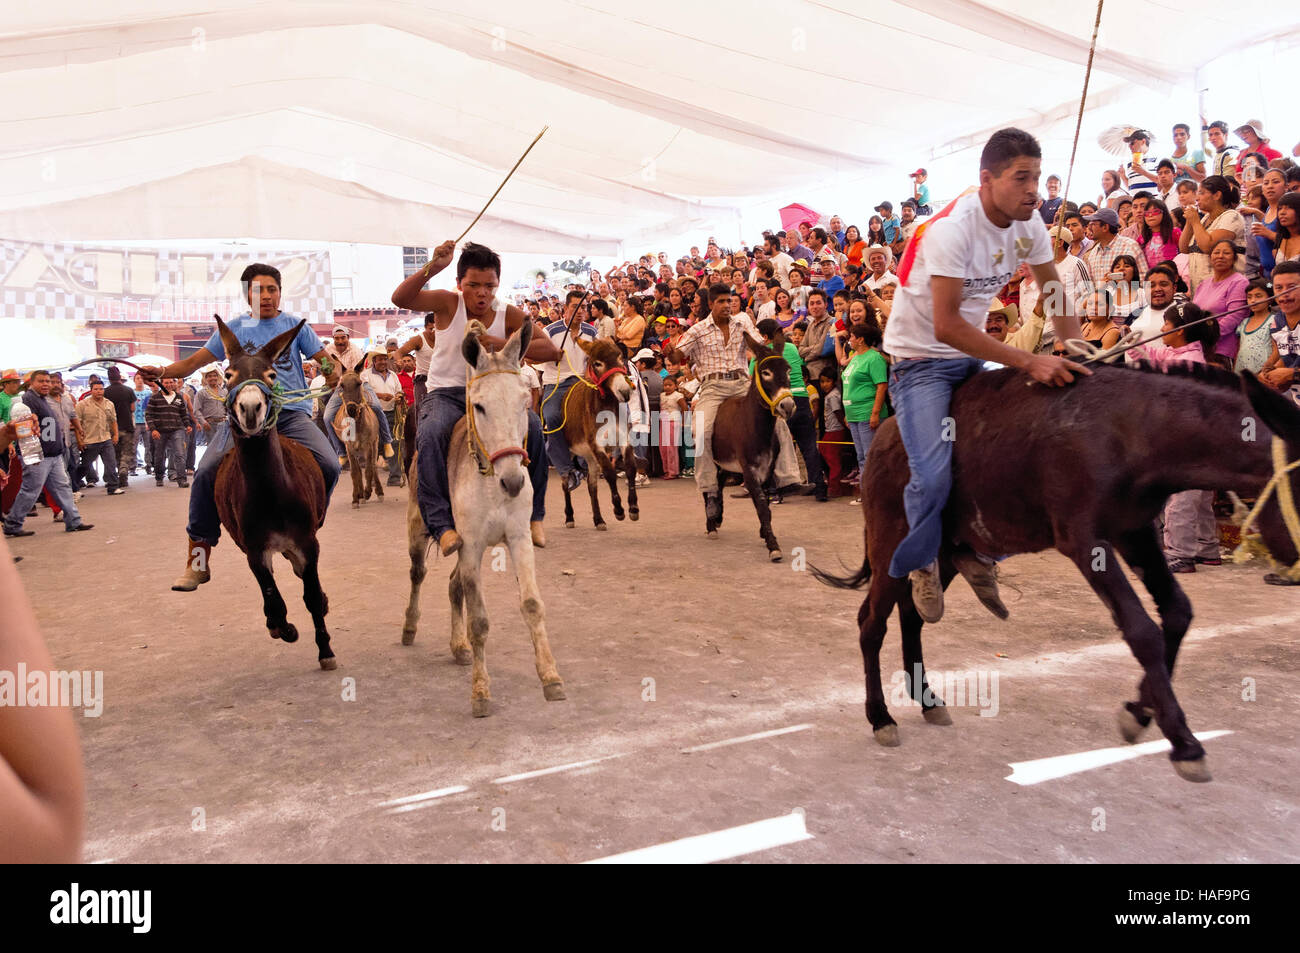 Traditional donkey race during the Donkey fair (Feria del burro) in Otumba, Mexico Stock Photo